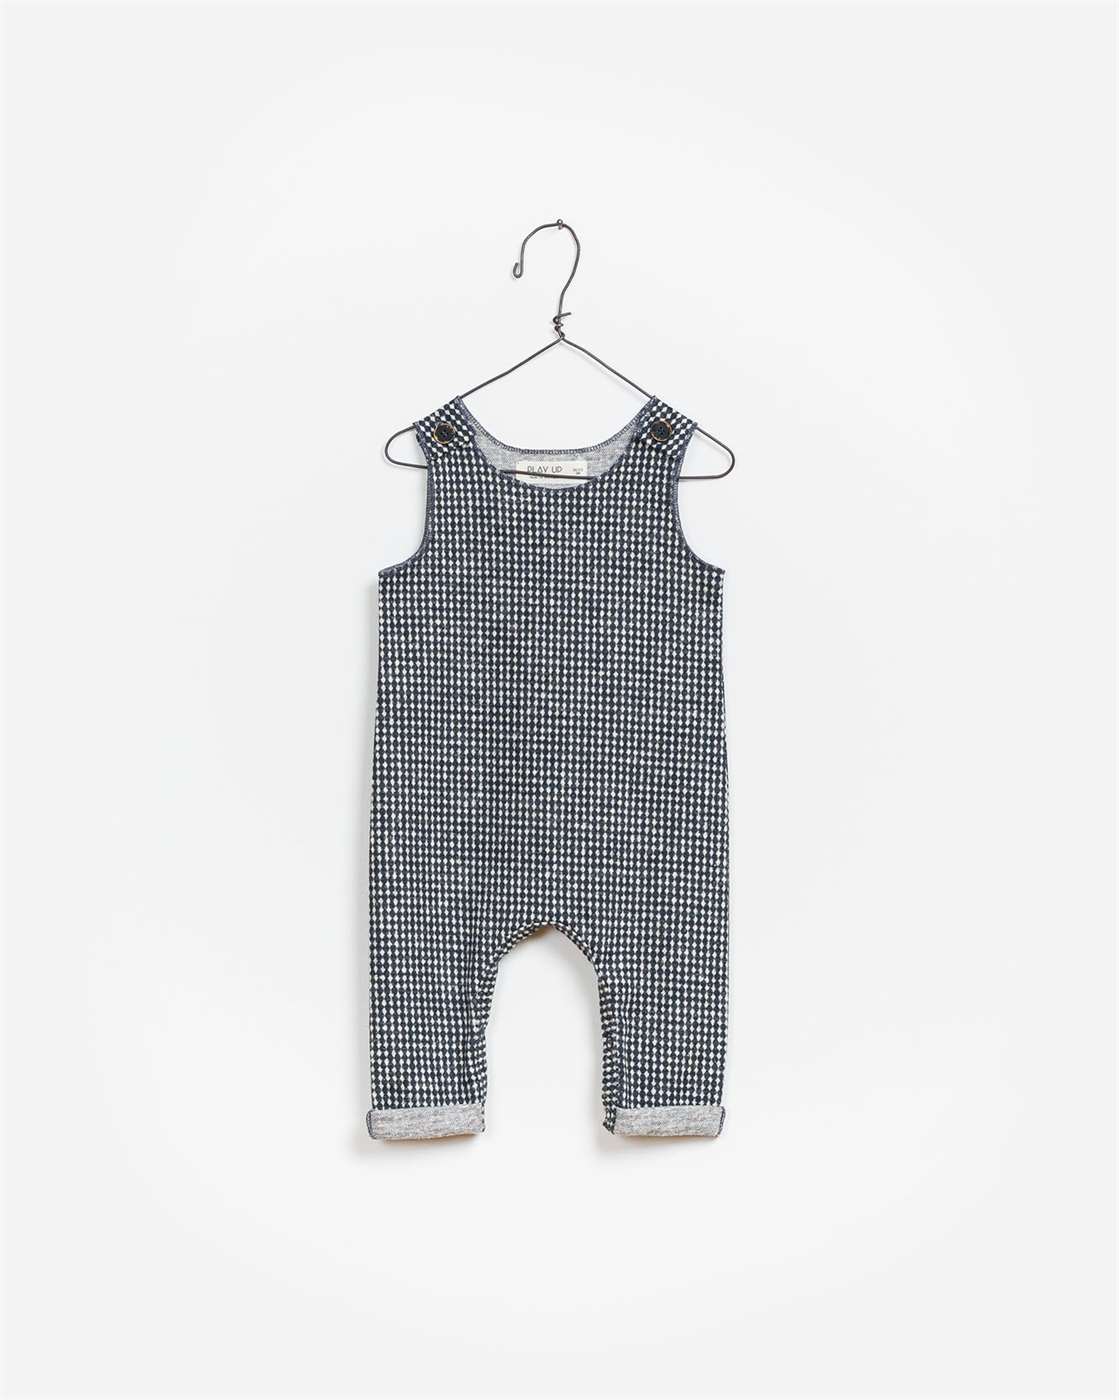 BeeBoo|BeeBoo PlayUp vêtements bébé baby clothes salopette overall Interlock gris grey